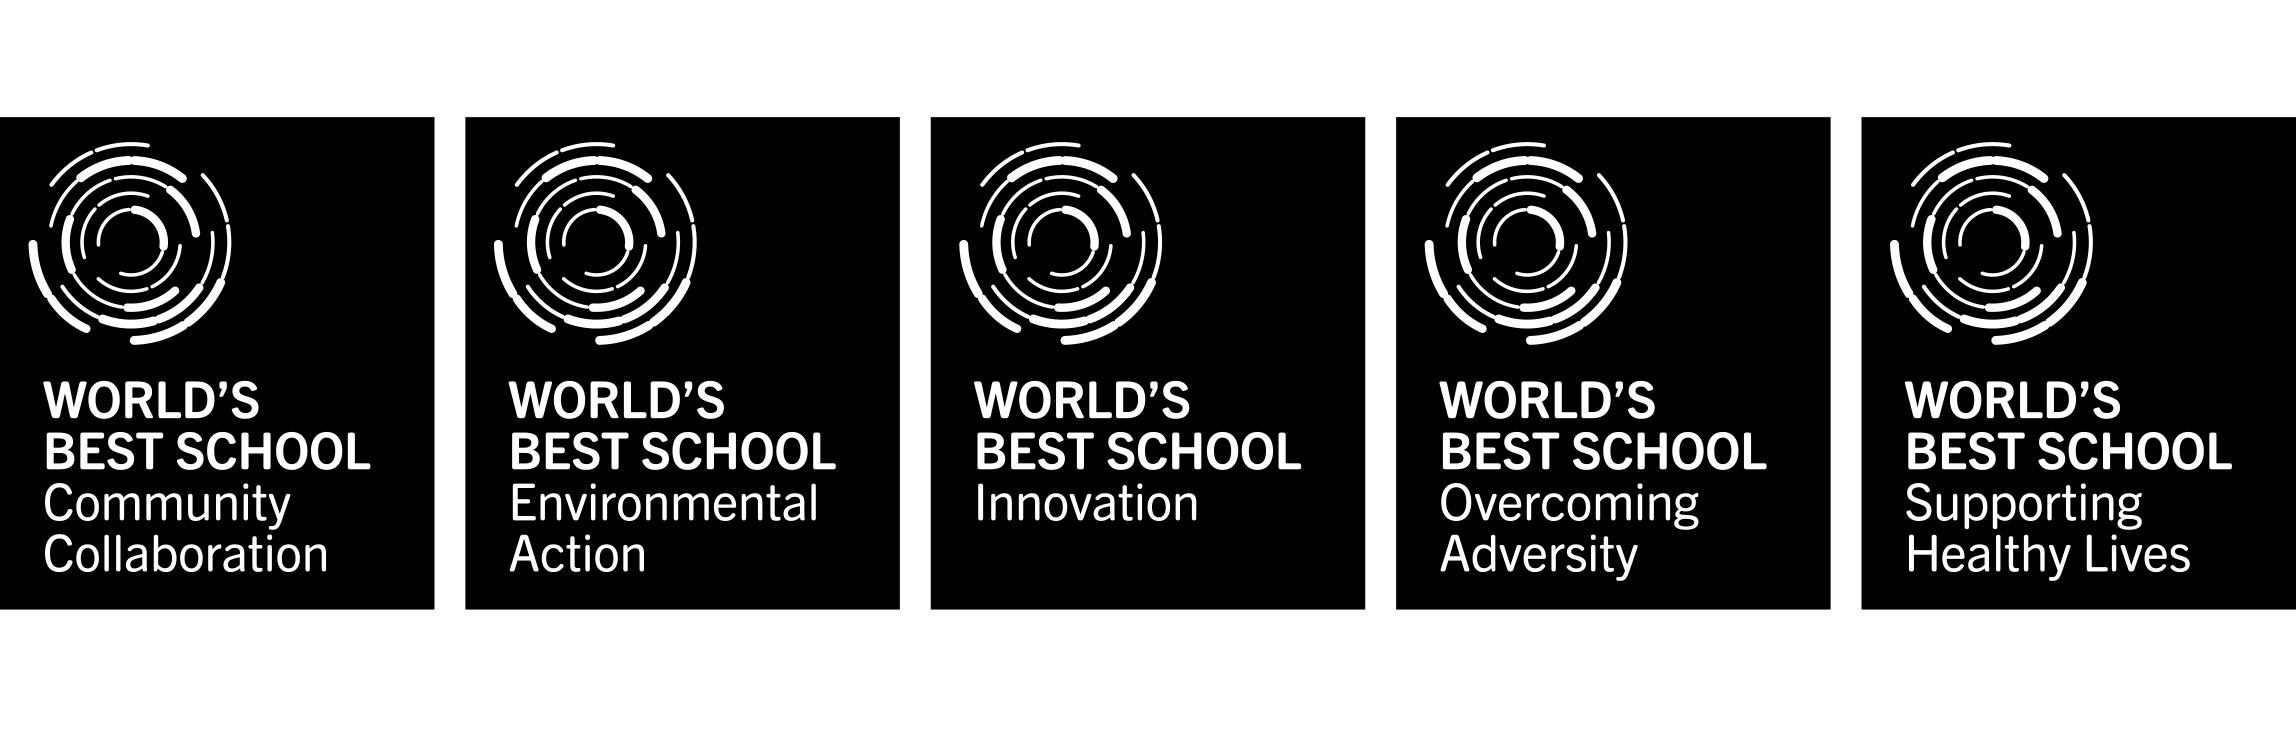 World's Best School Prizes five ripple logos